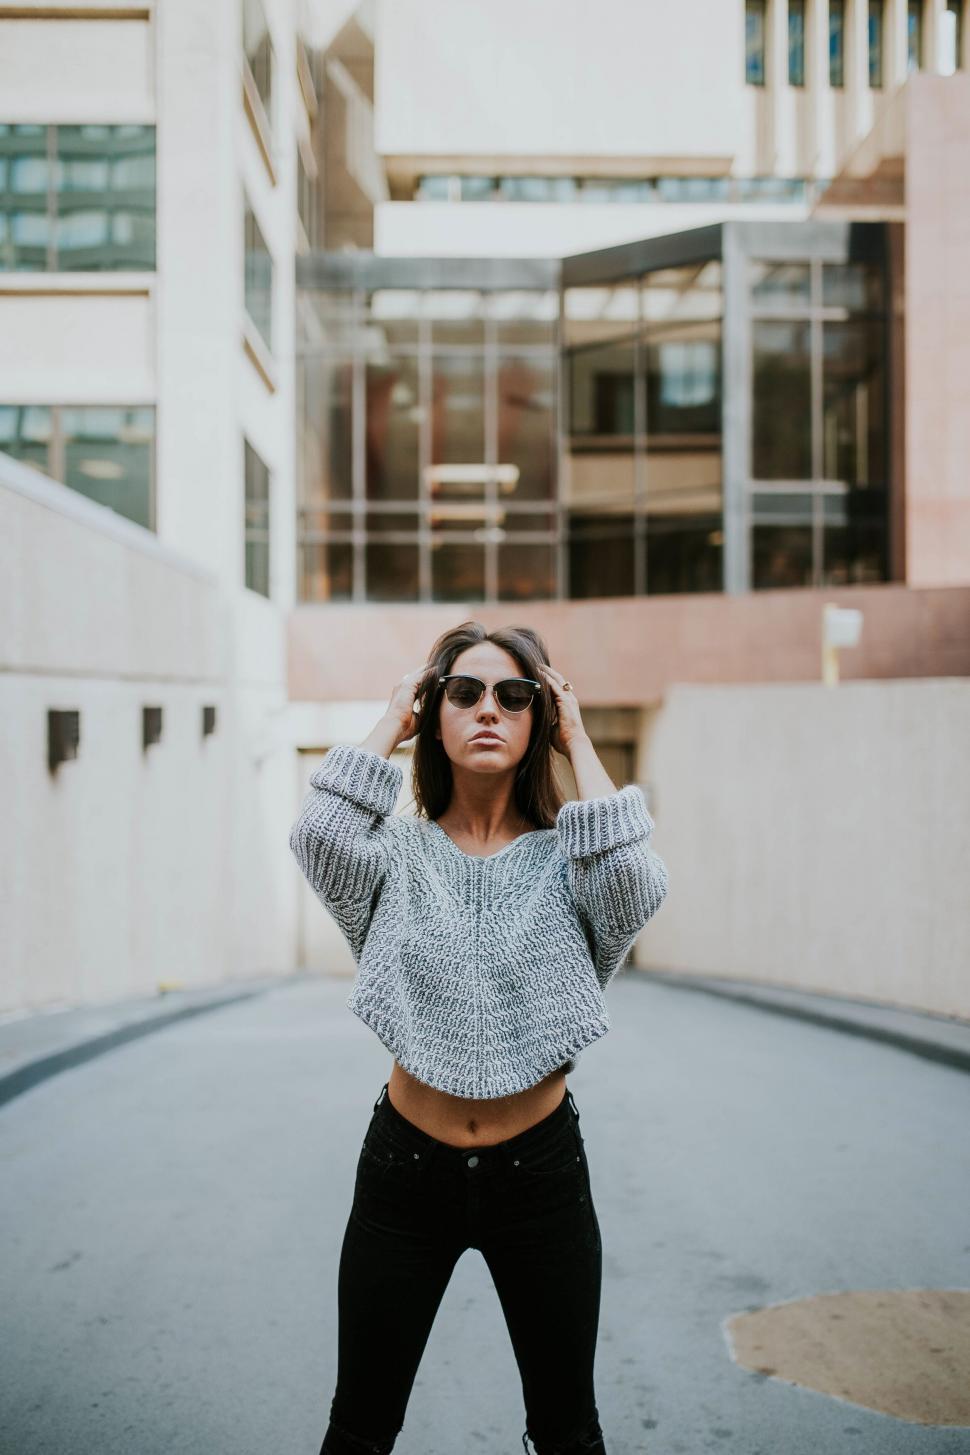 Free Image of Woman in knit sweater posing in urban setting 